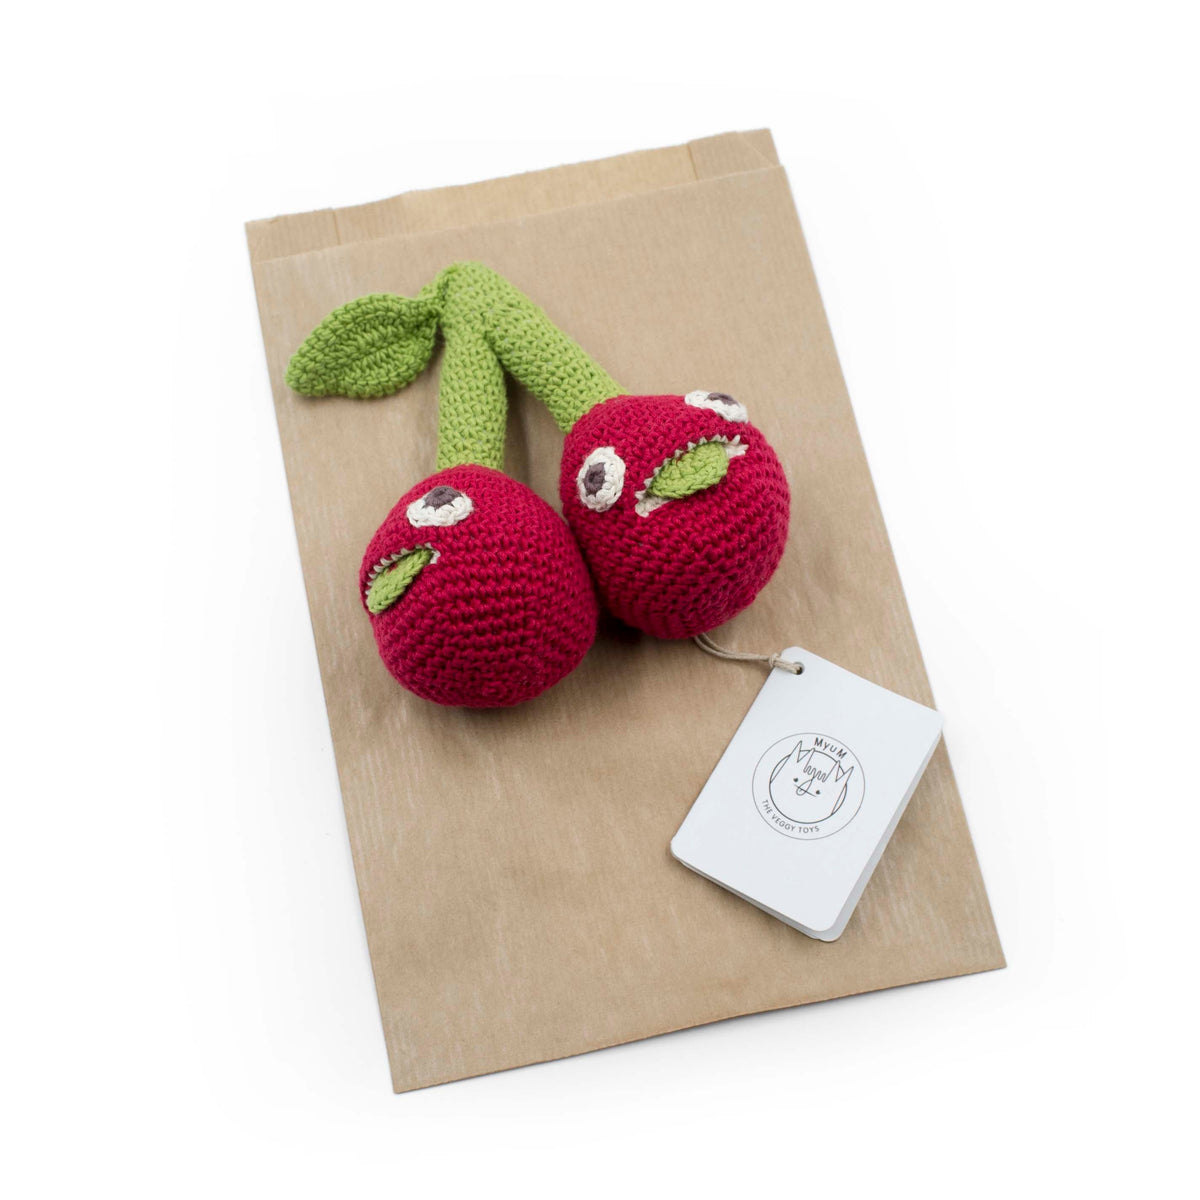 Myum MyuM - The Cherry Sisters Crocheted Baby Rattle Soft toys